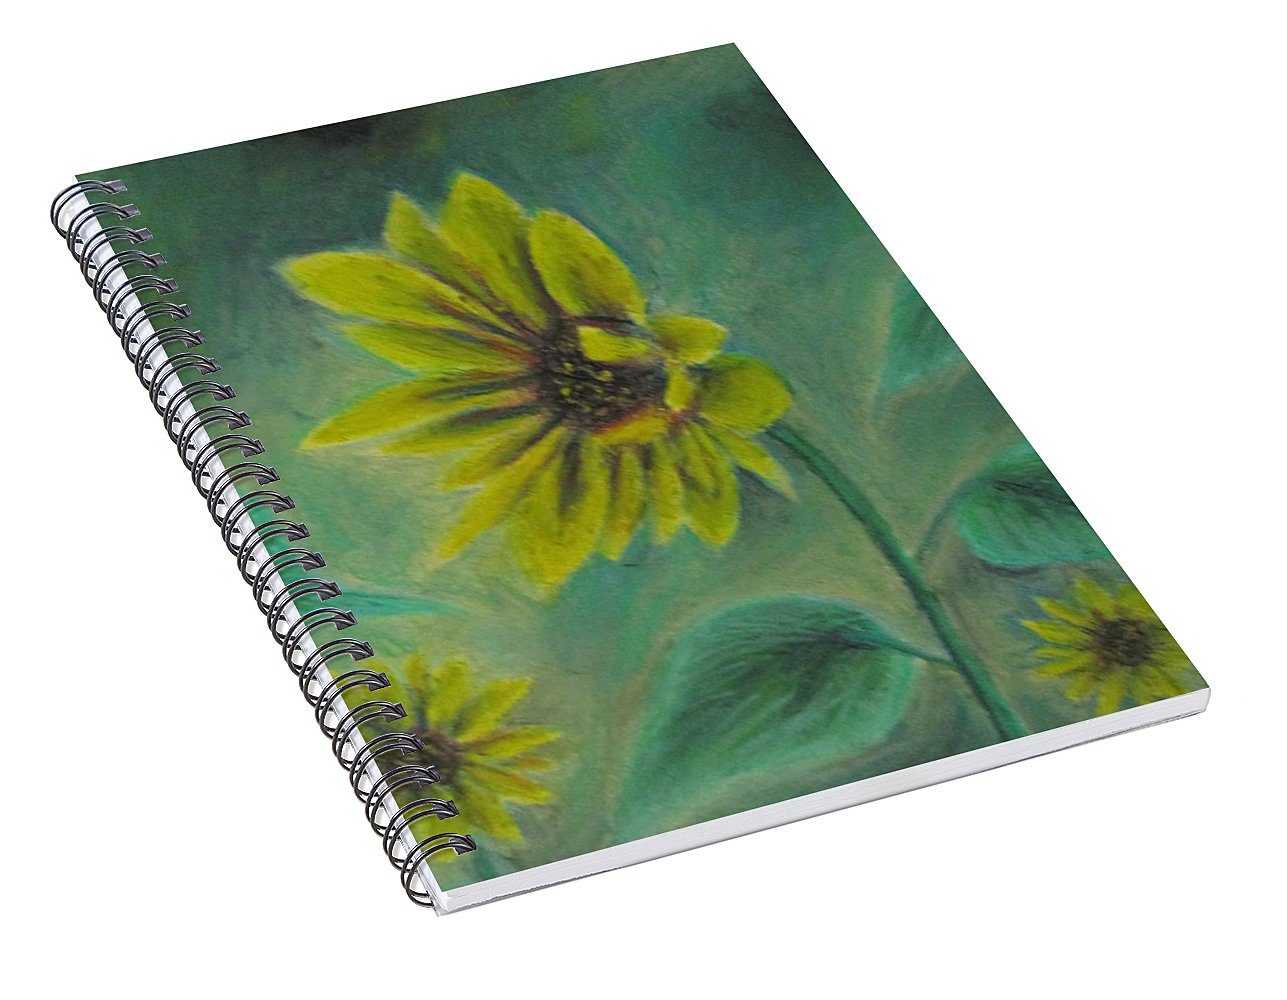 Hazing Sunflowers - Spiral Notebook